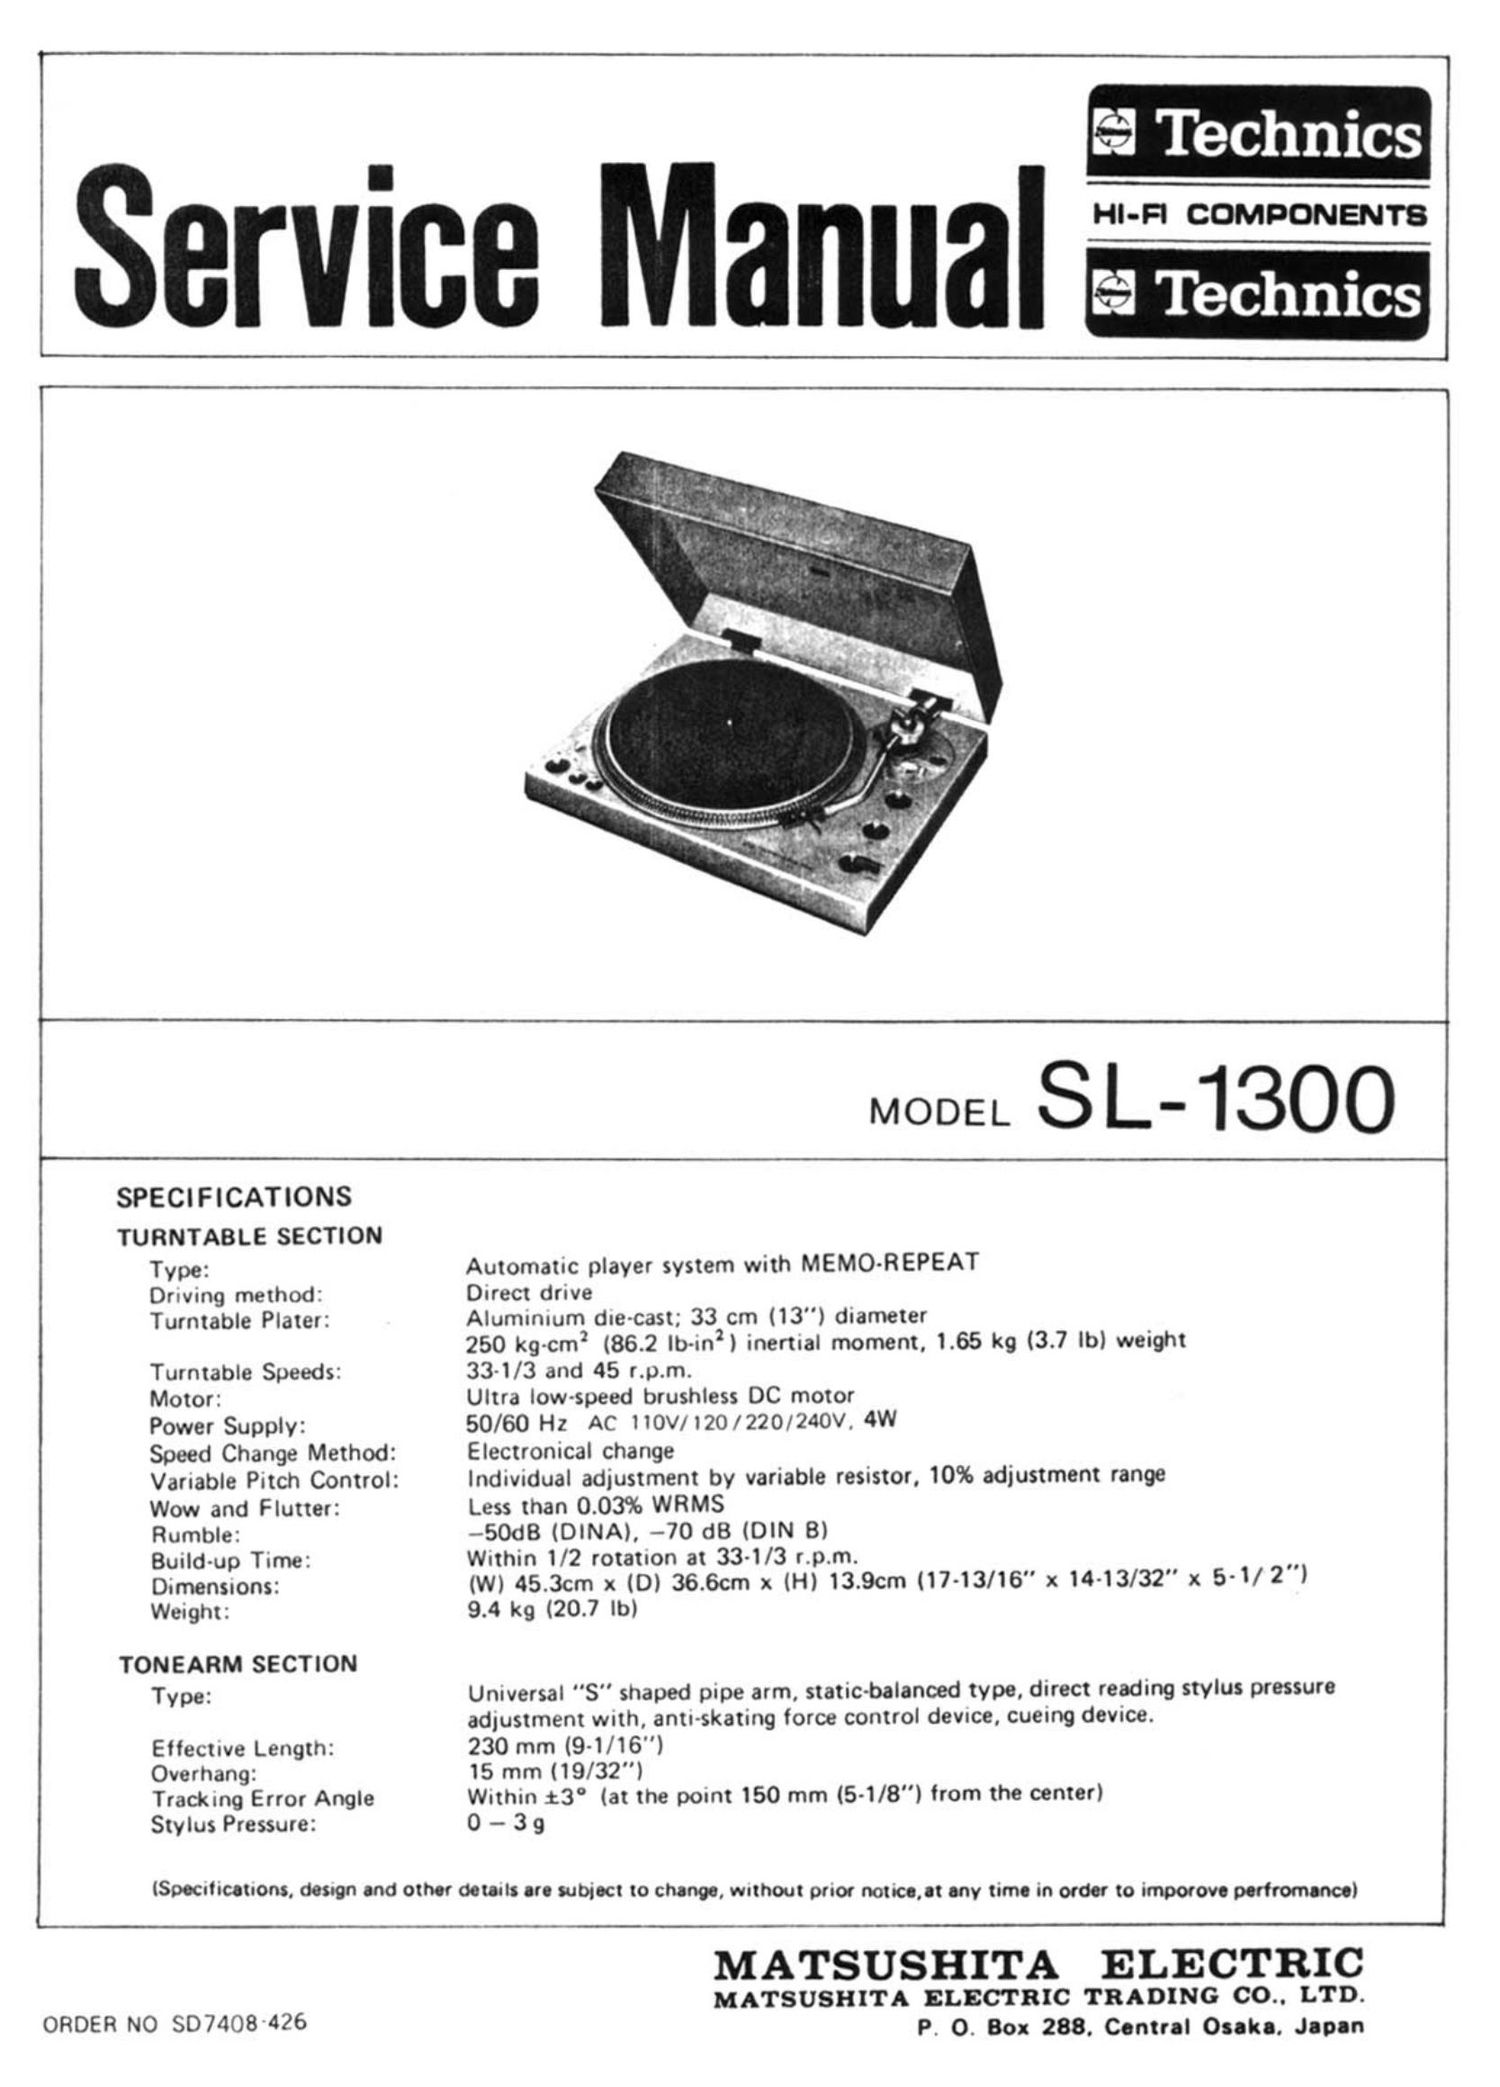 Technics SL 1300 Service Manual